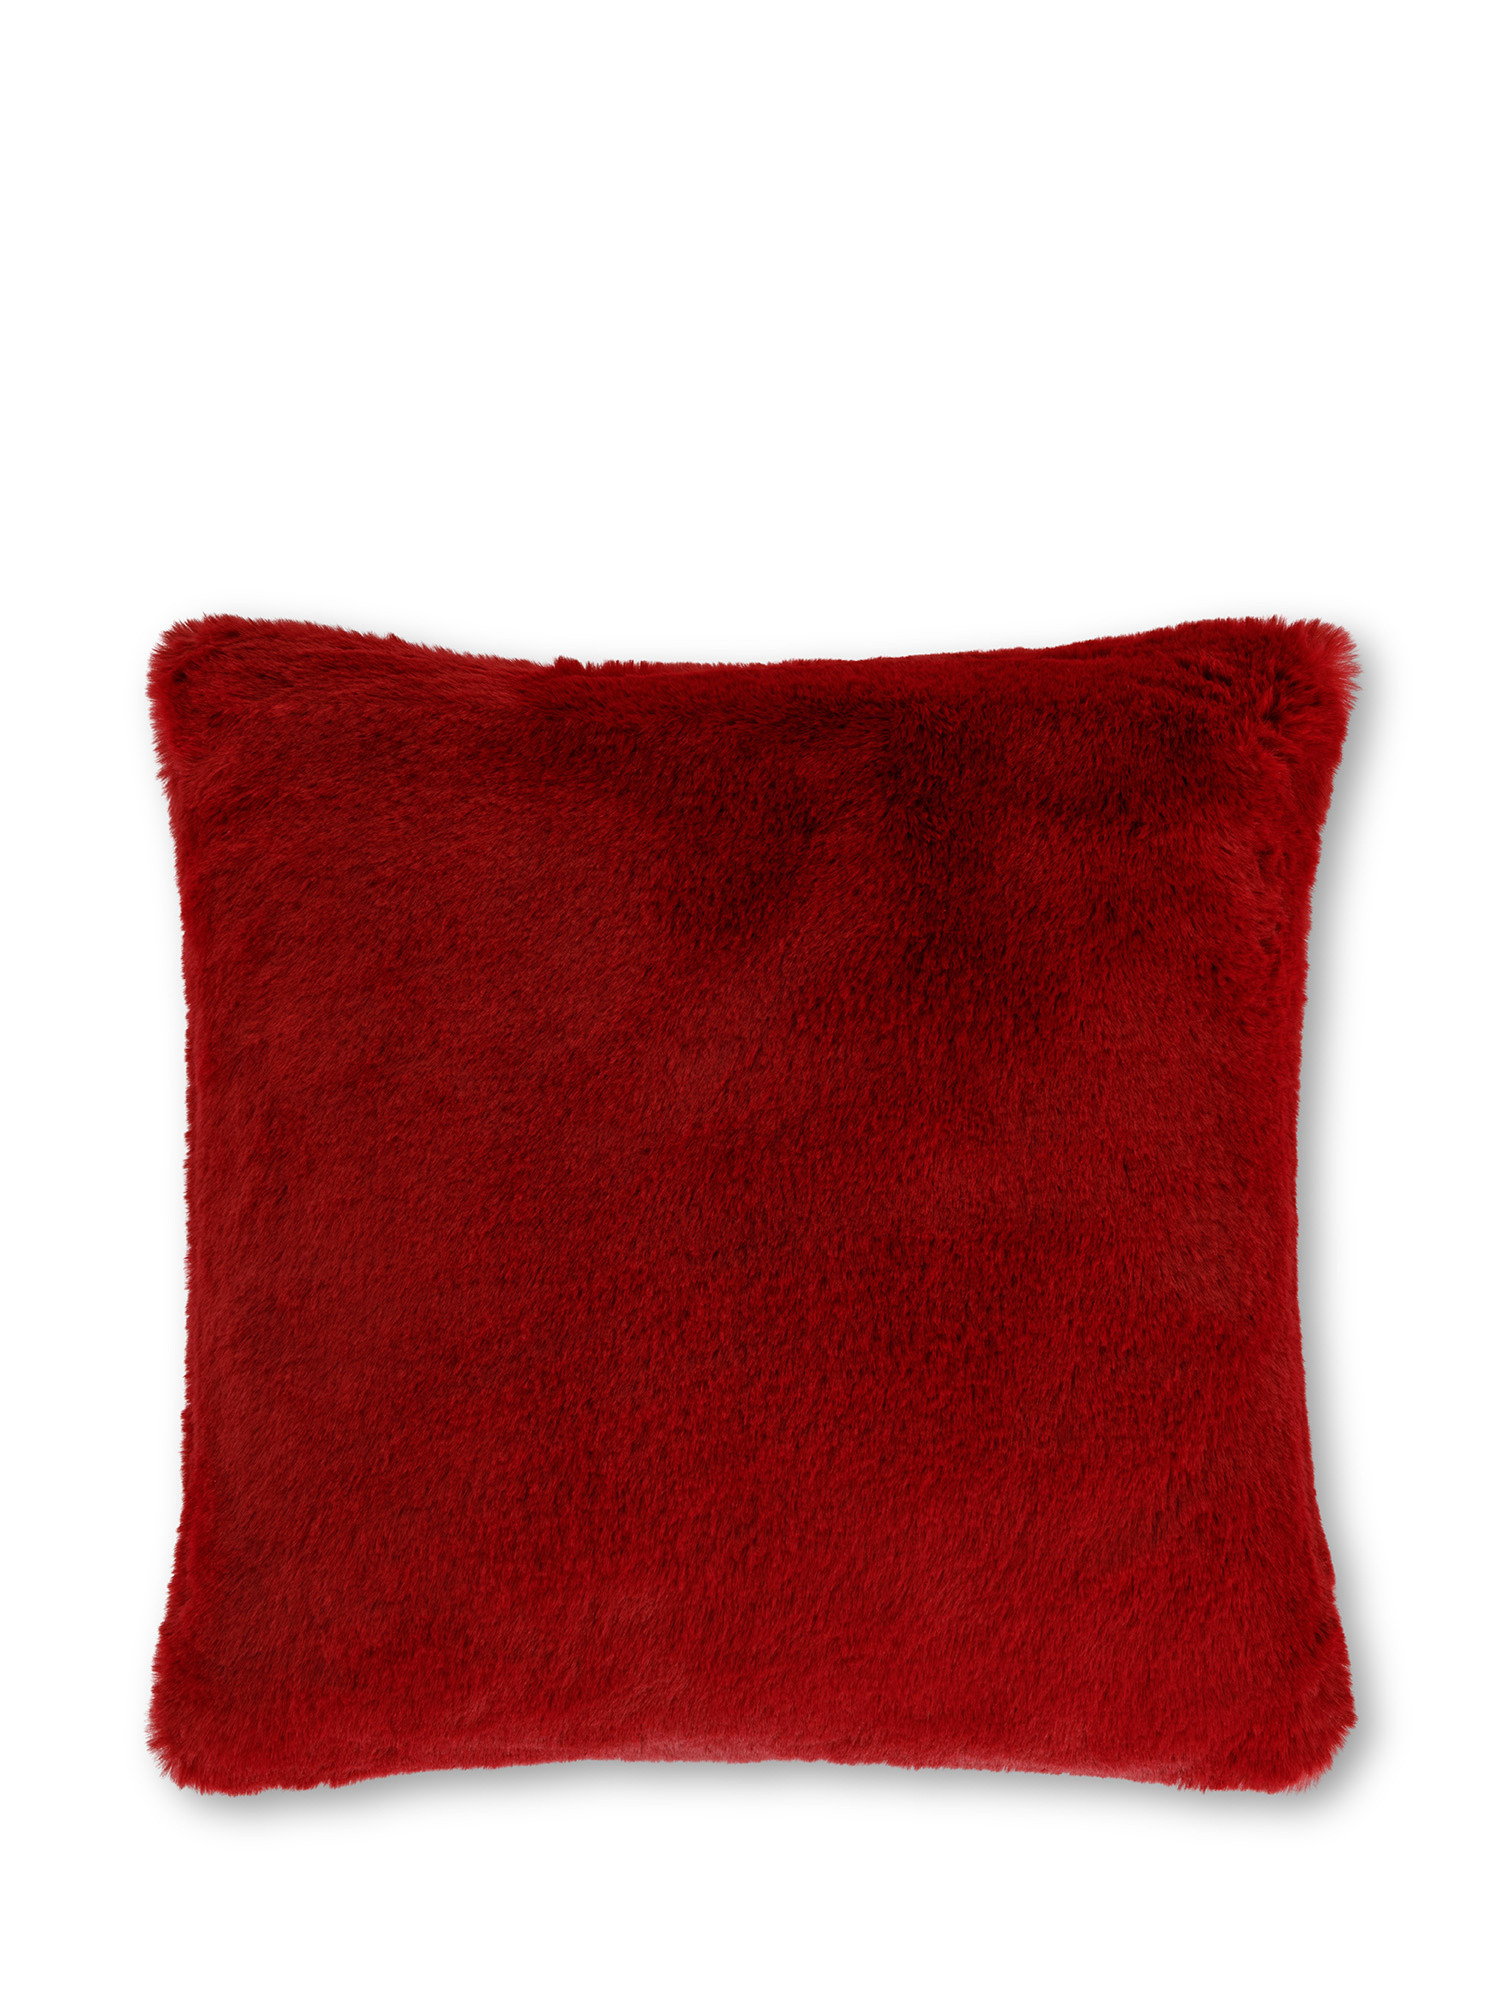 Cuscino effetto pelo tinta unita, Rosso, large image number 0